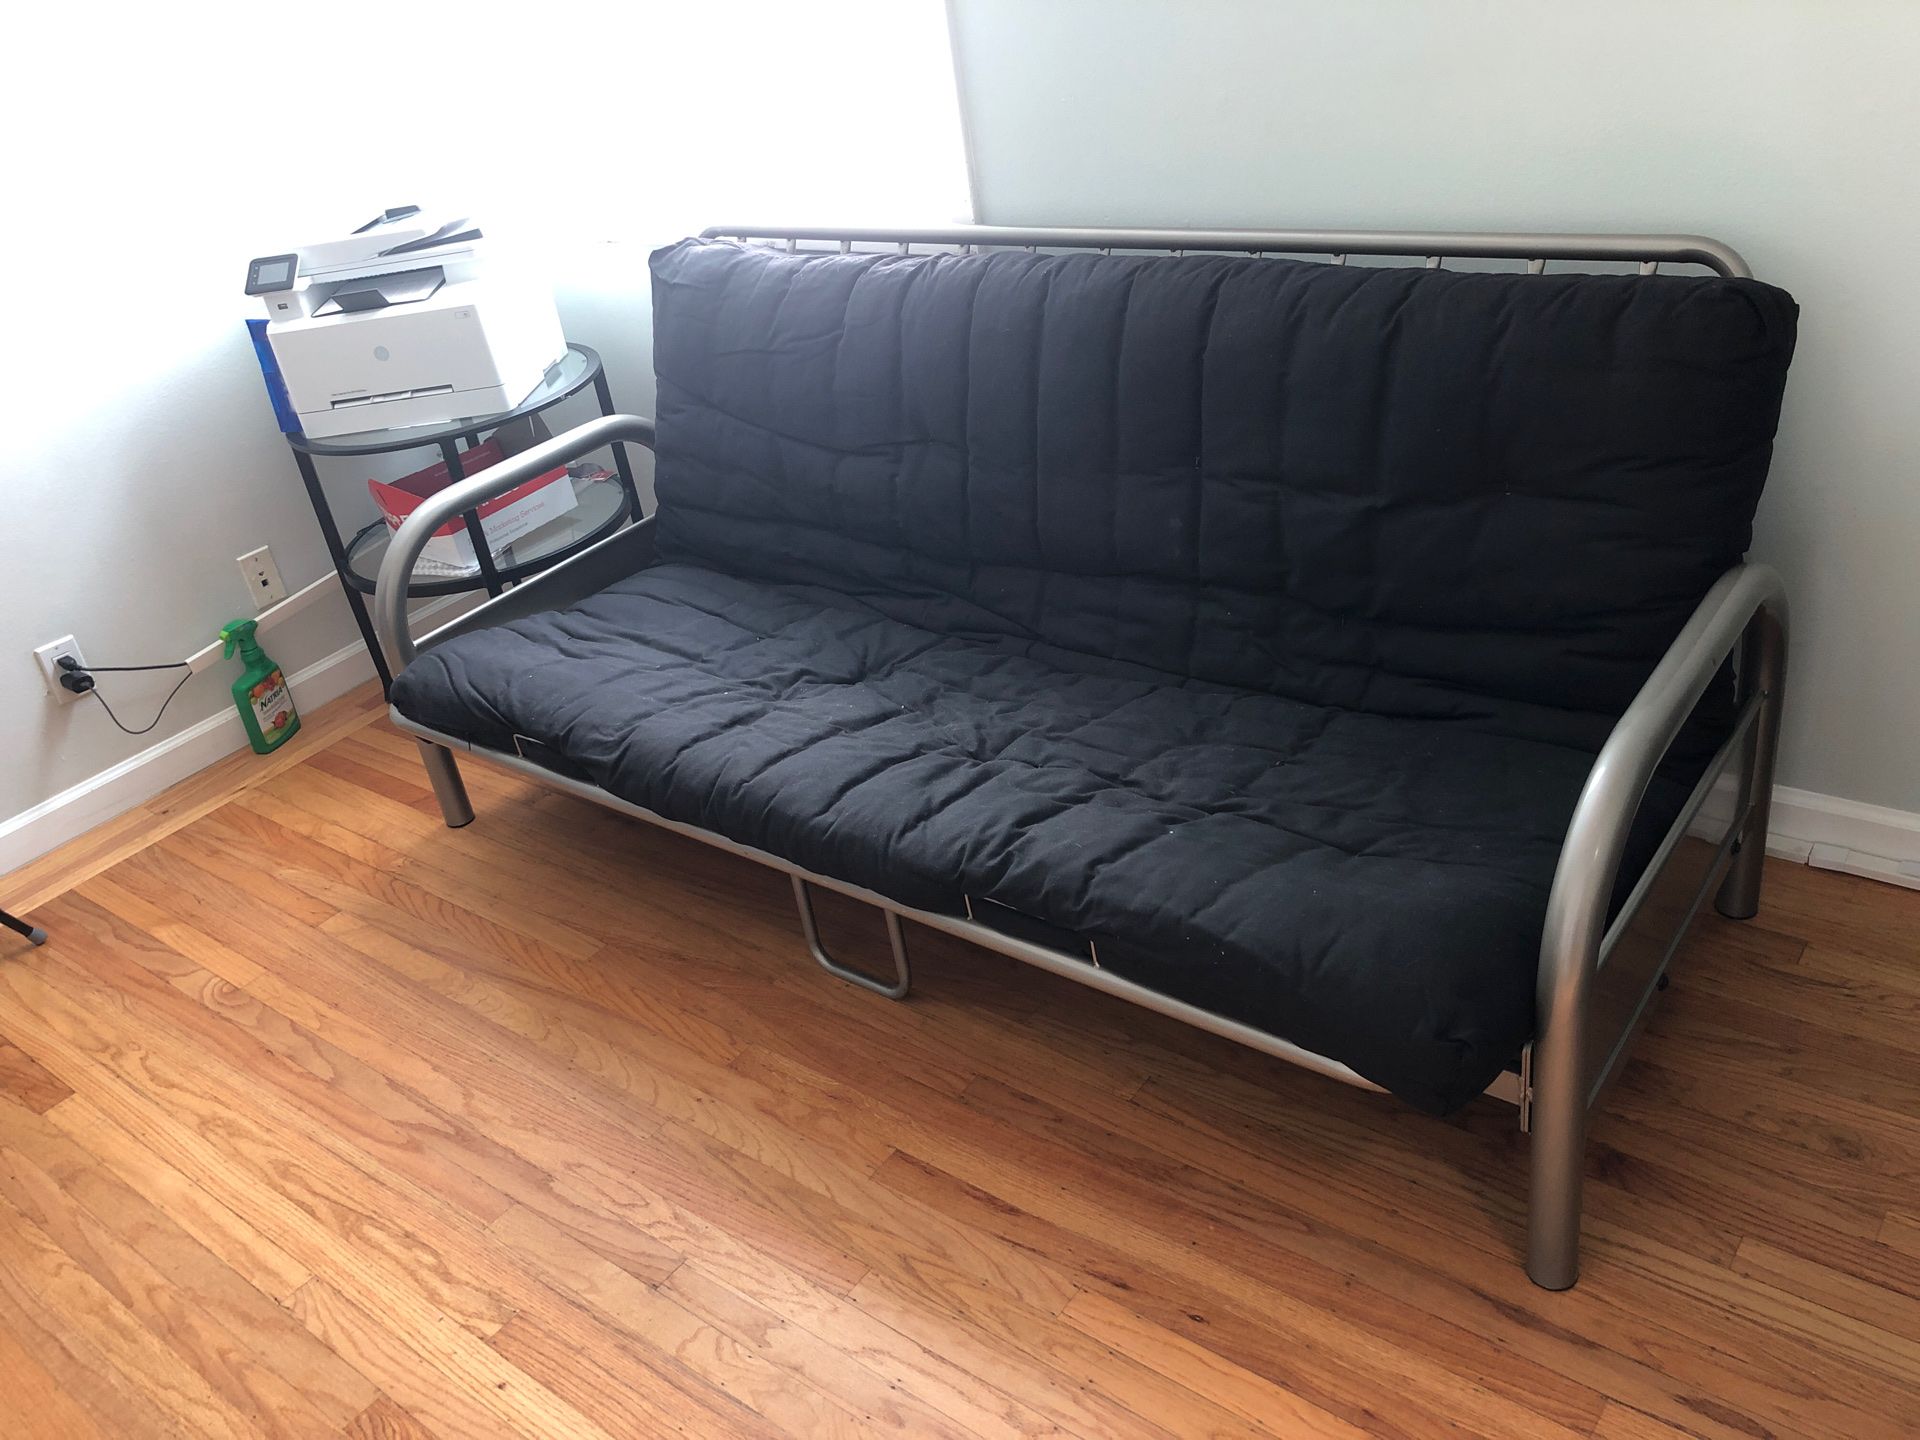 FUTON - Black cushion with gray metal frame